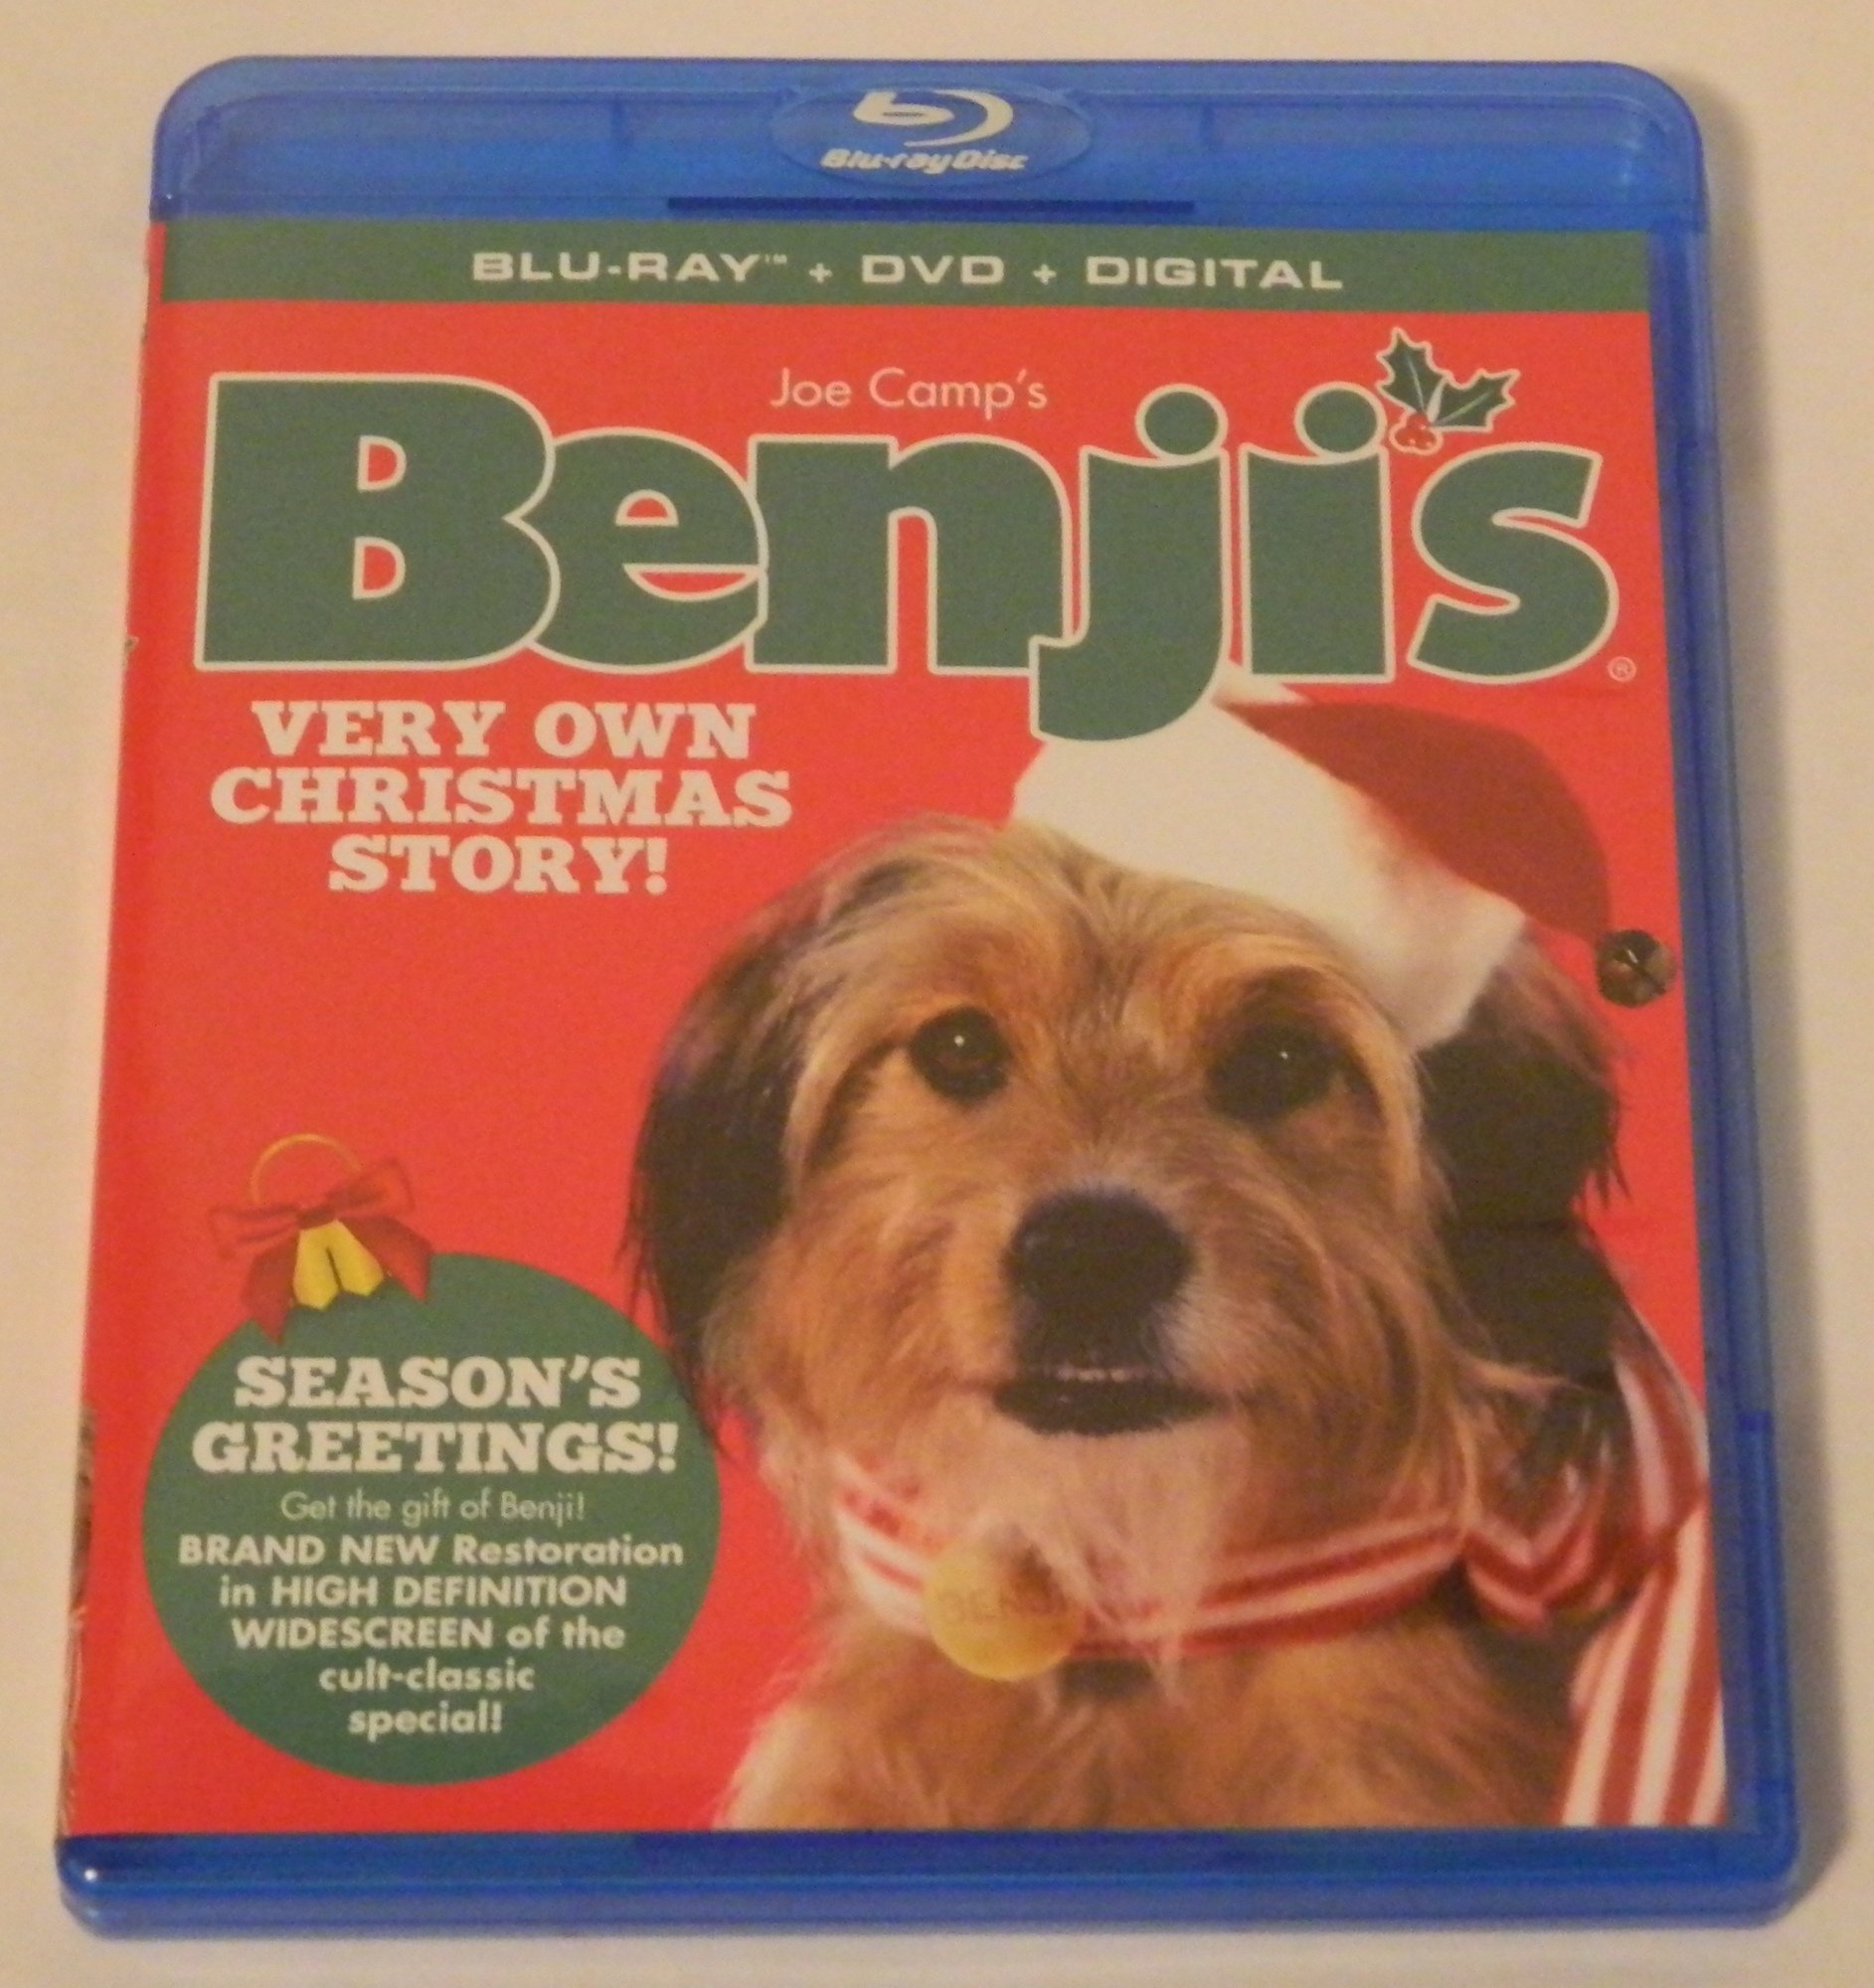 Benji’s Very Own Christmas Story Blu-ray Review